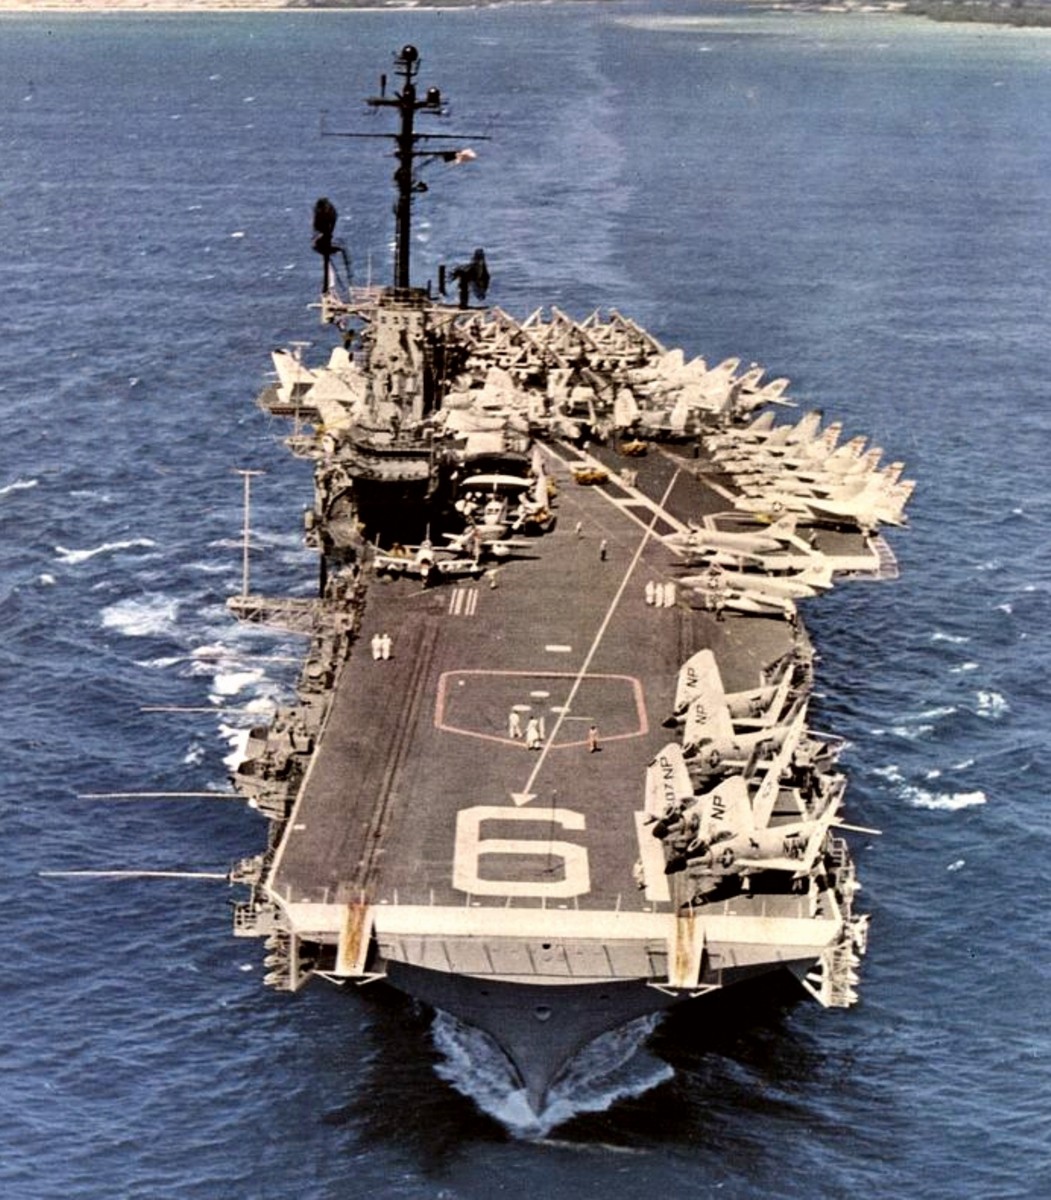 cva-19 uss hancock cv essex class aircraft carrier air group cvg-21 us navy 03a pearl harbor hawaii